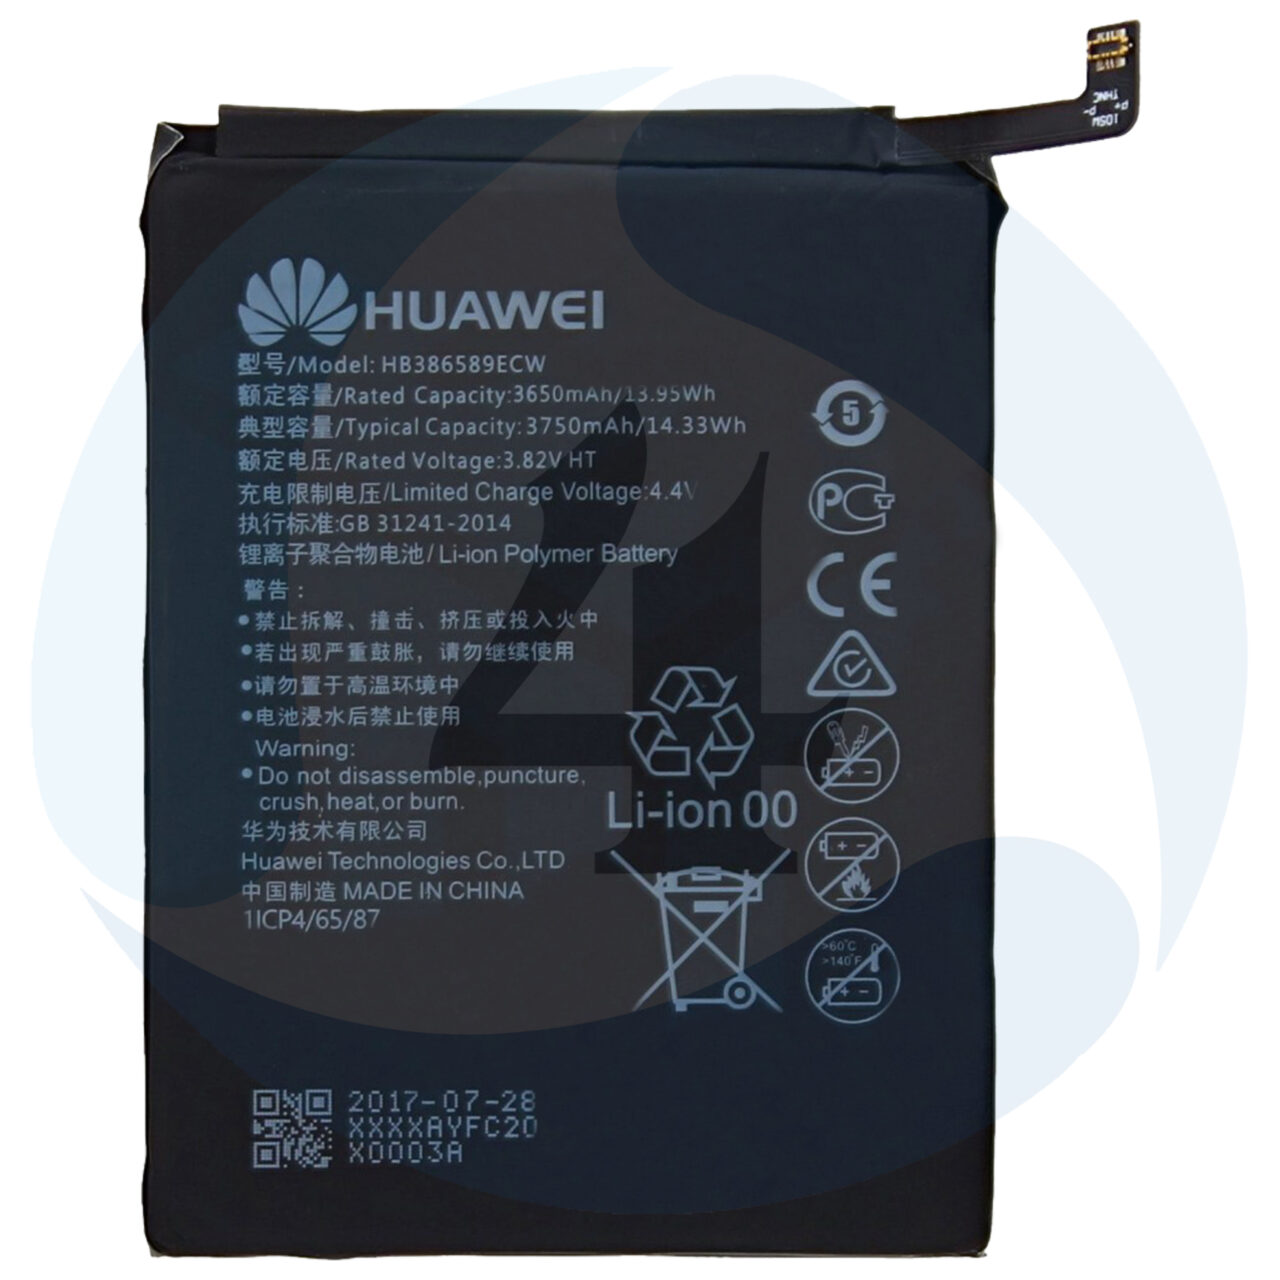 Huawei Battery HB386589 CW 3750m Ah 24022731 honor view 10